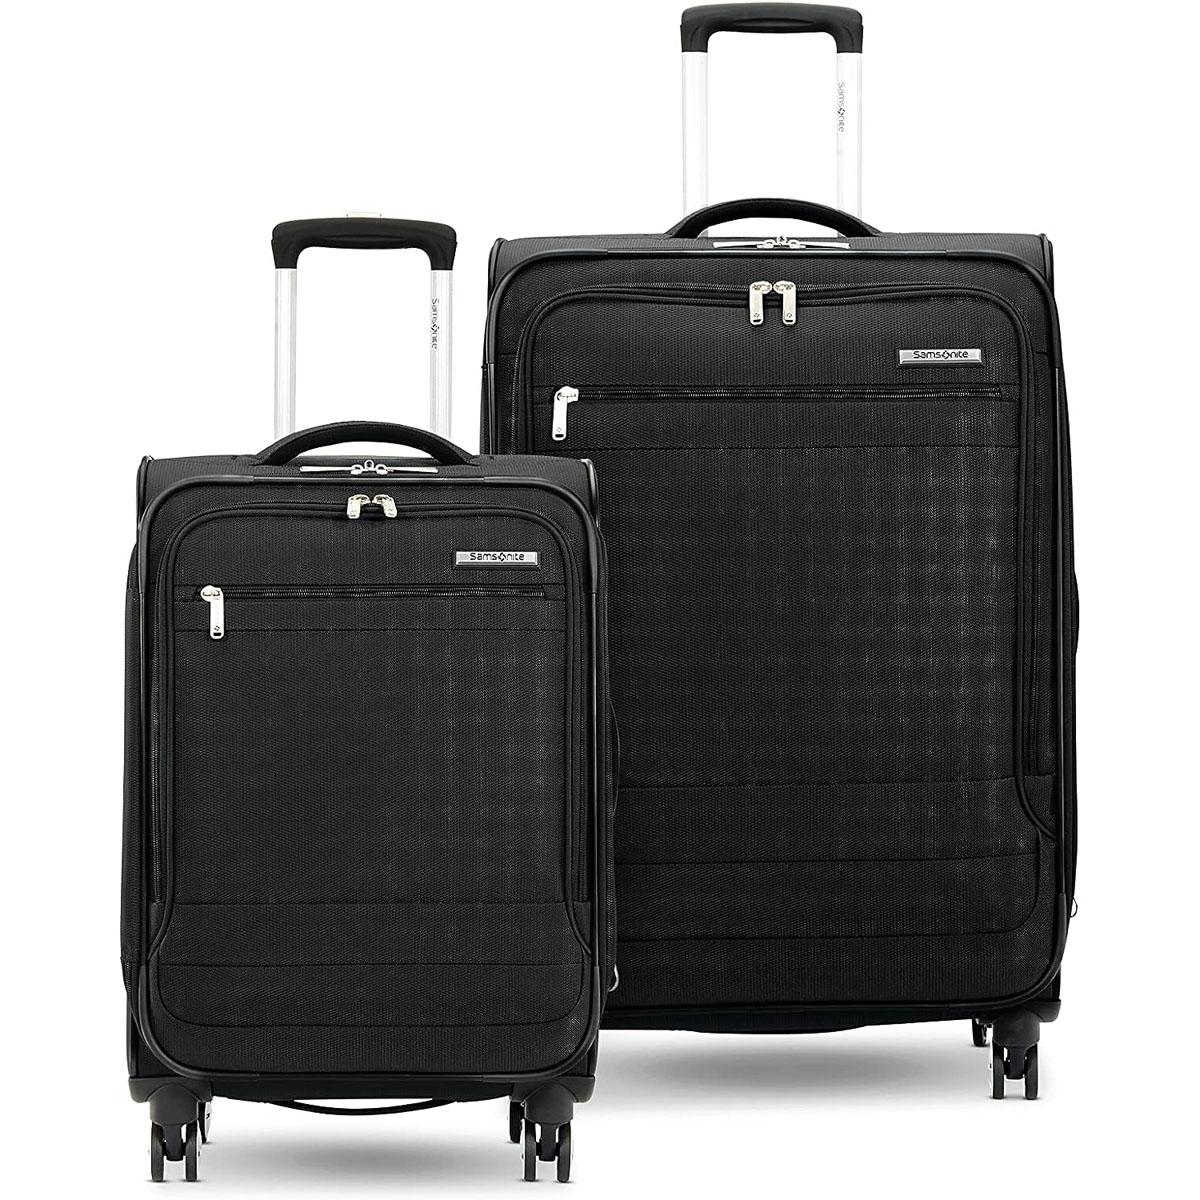 Samsonite Aspire DLX Softside Expandable Luggage Set for $129.99 Shipped